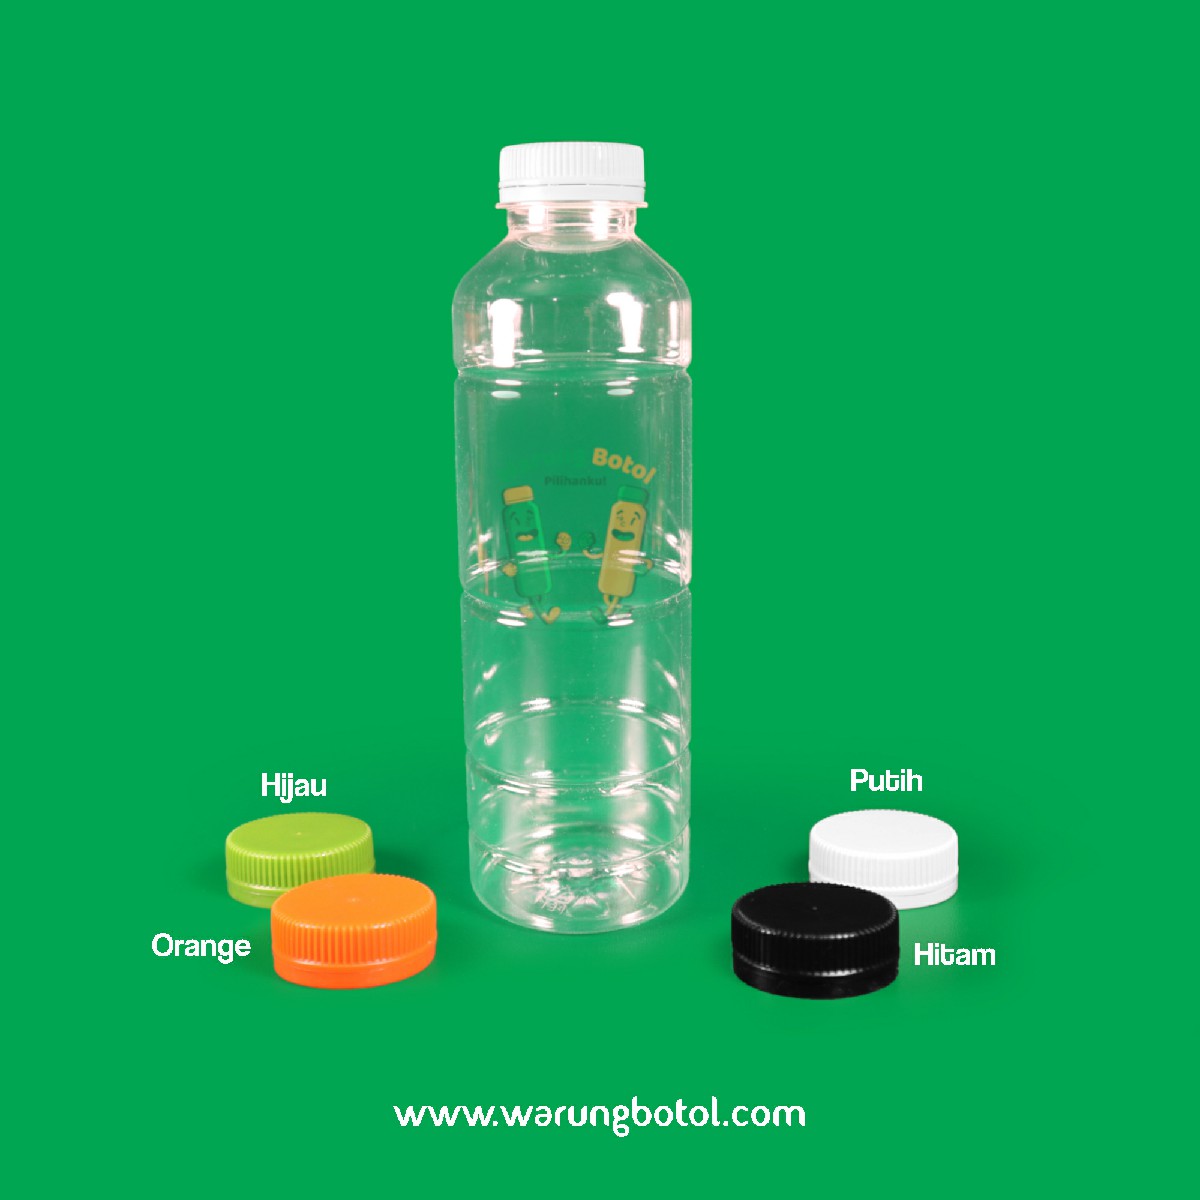  botol kemasan plastik untuk produk minuman anda dengan kapasitas ukuran 330ml, botol plastik akali ini biasa digunakan untuk keperluan kemasan minuman seperti sirup, jus, teh, kopi, keperluan jualan 